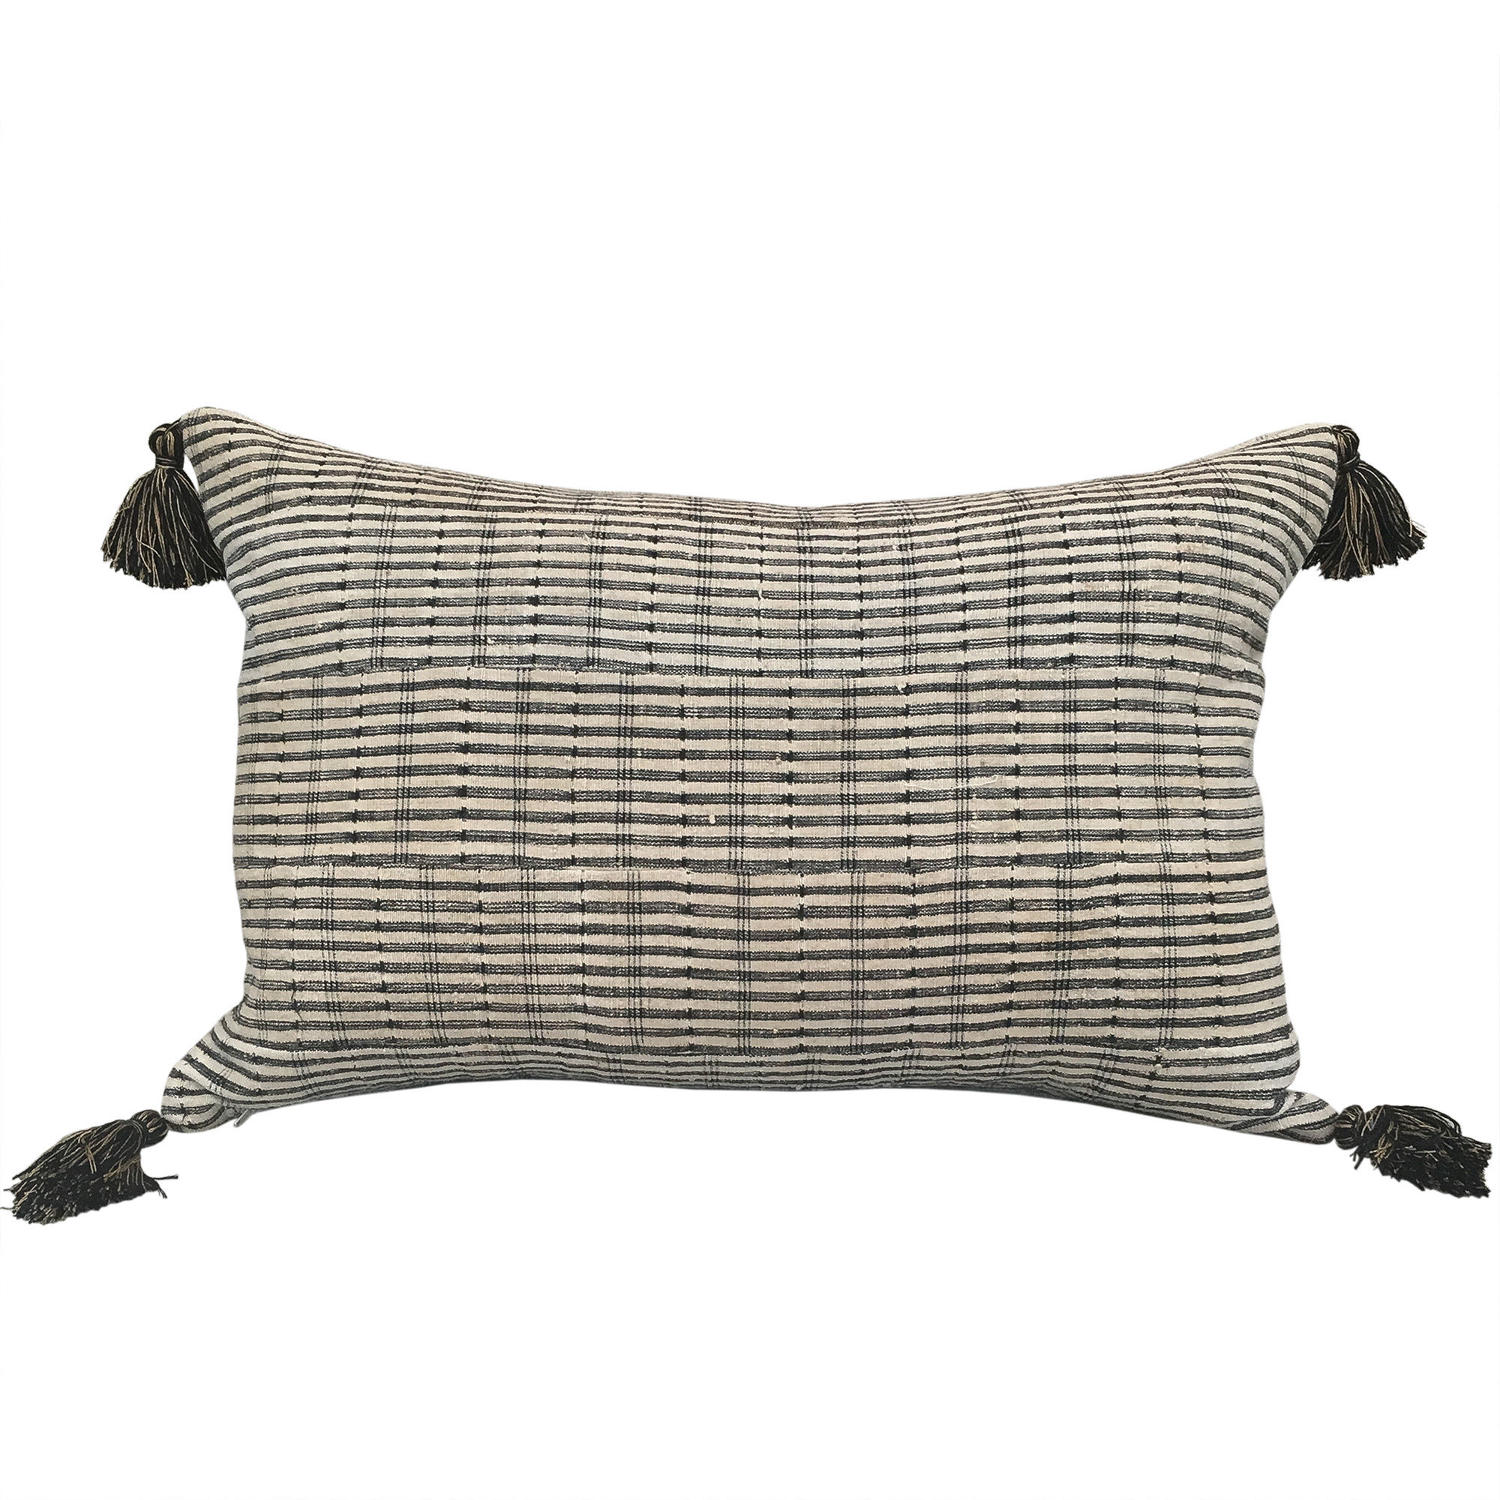 Yoruba Cushions with Tassels